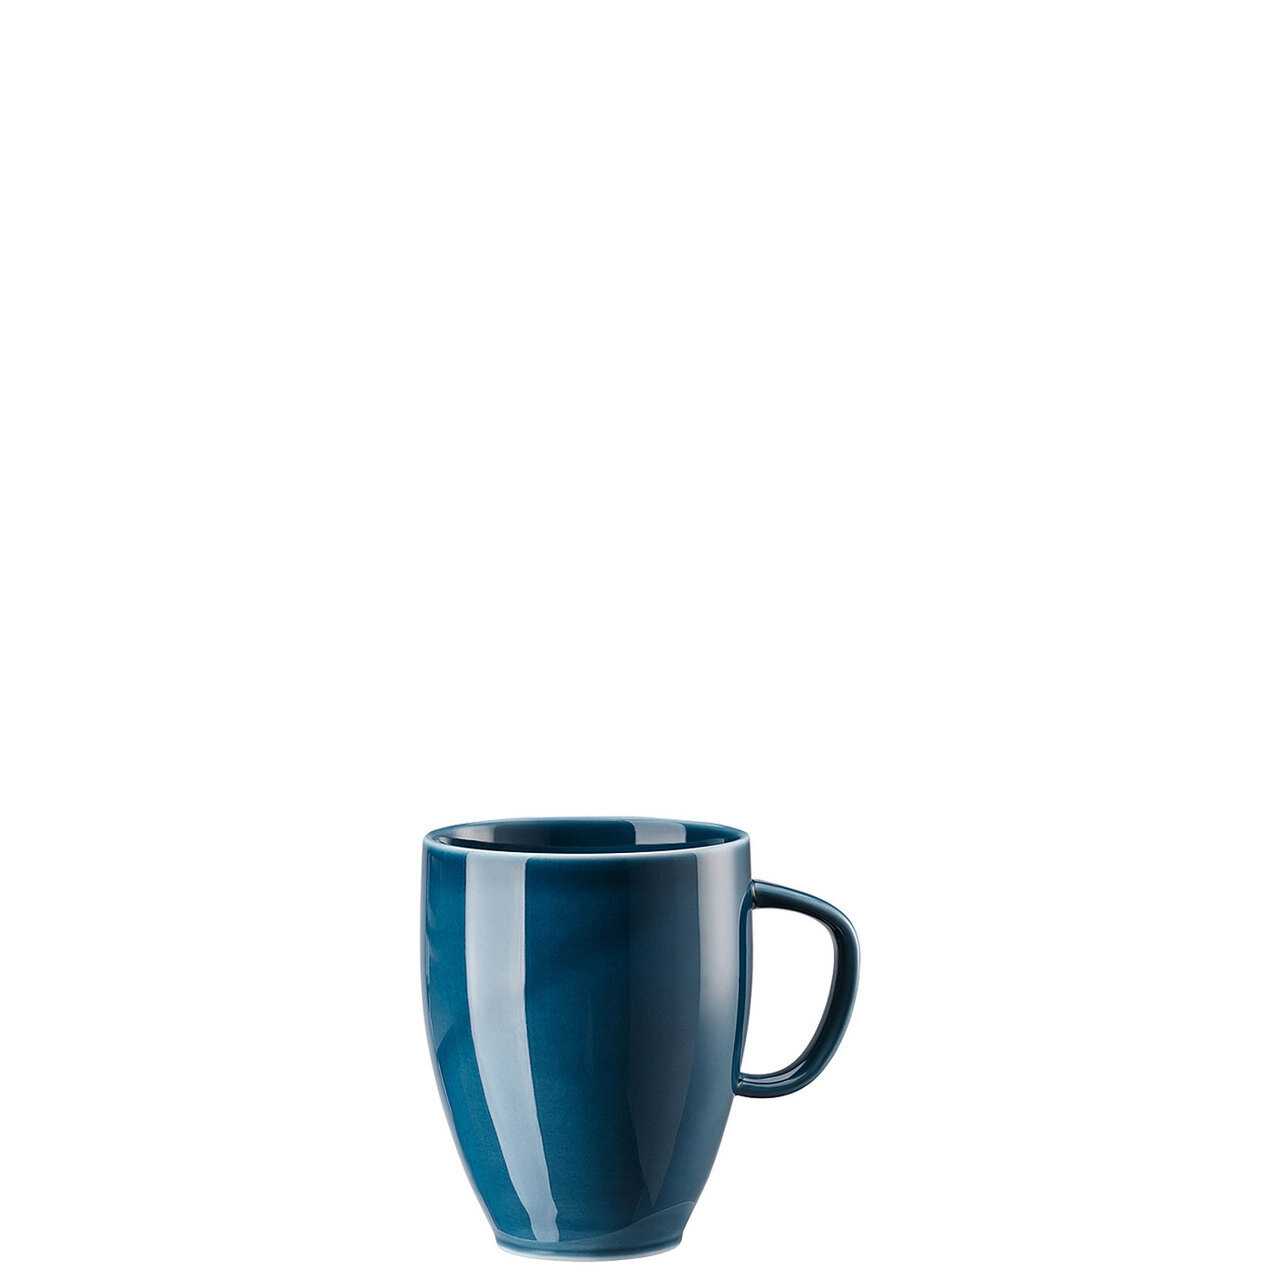 Rosenthal Junto Ocean Blue Mug With Handle 12 3/4 oz